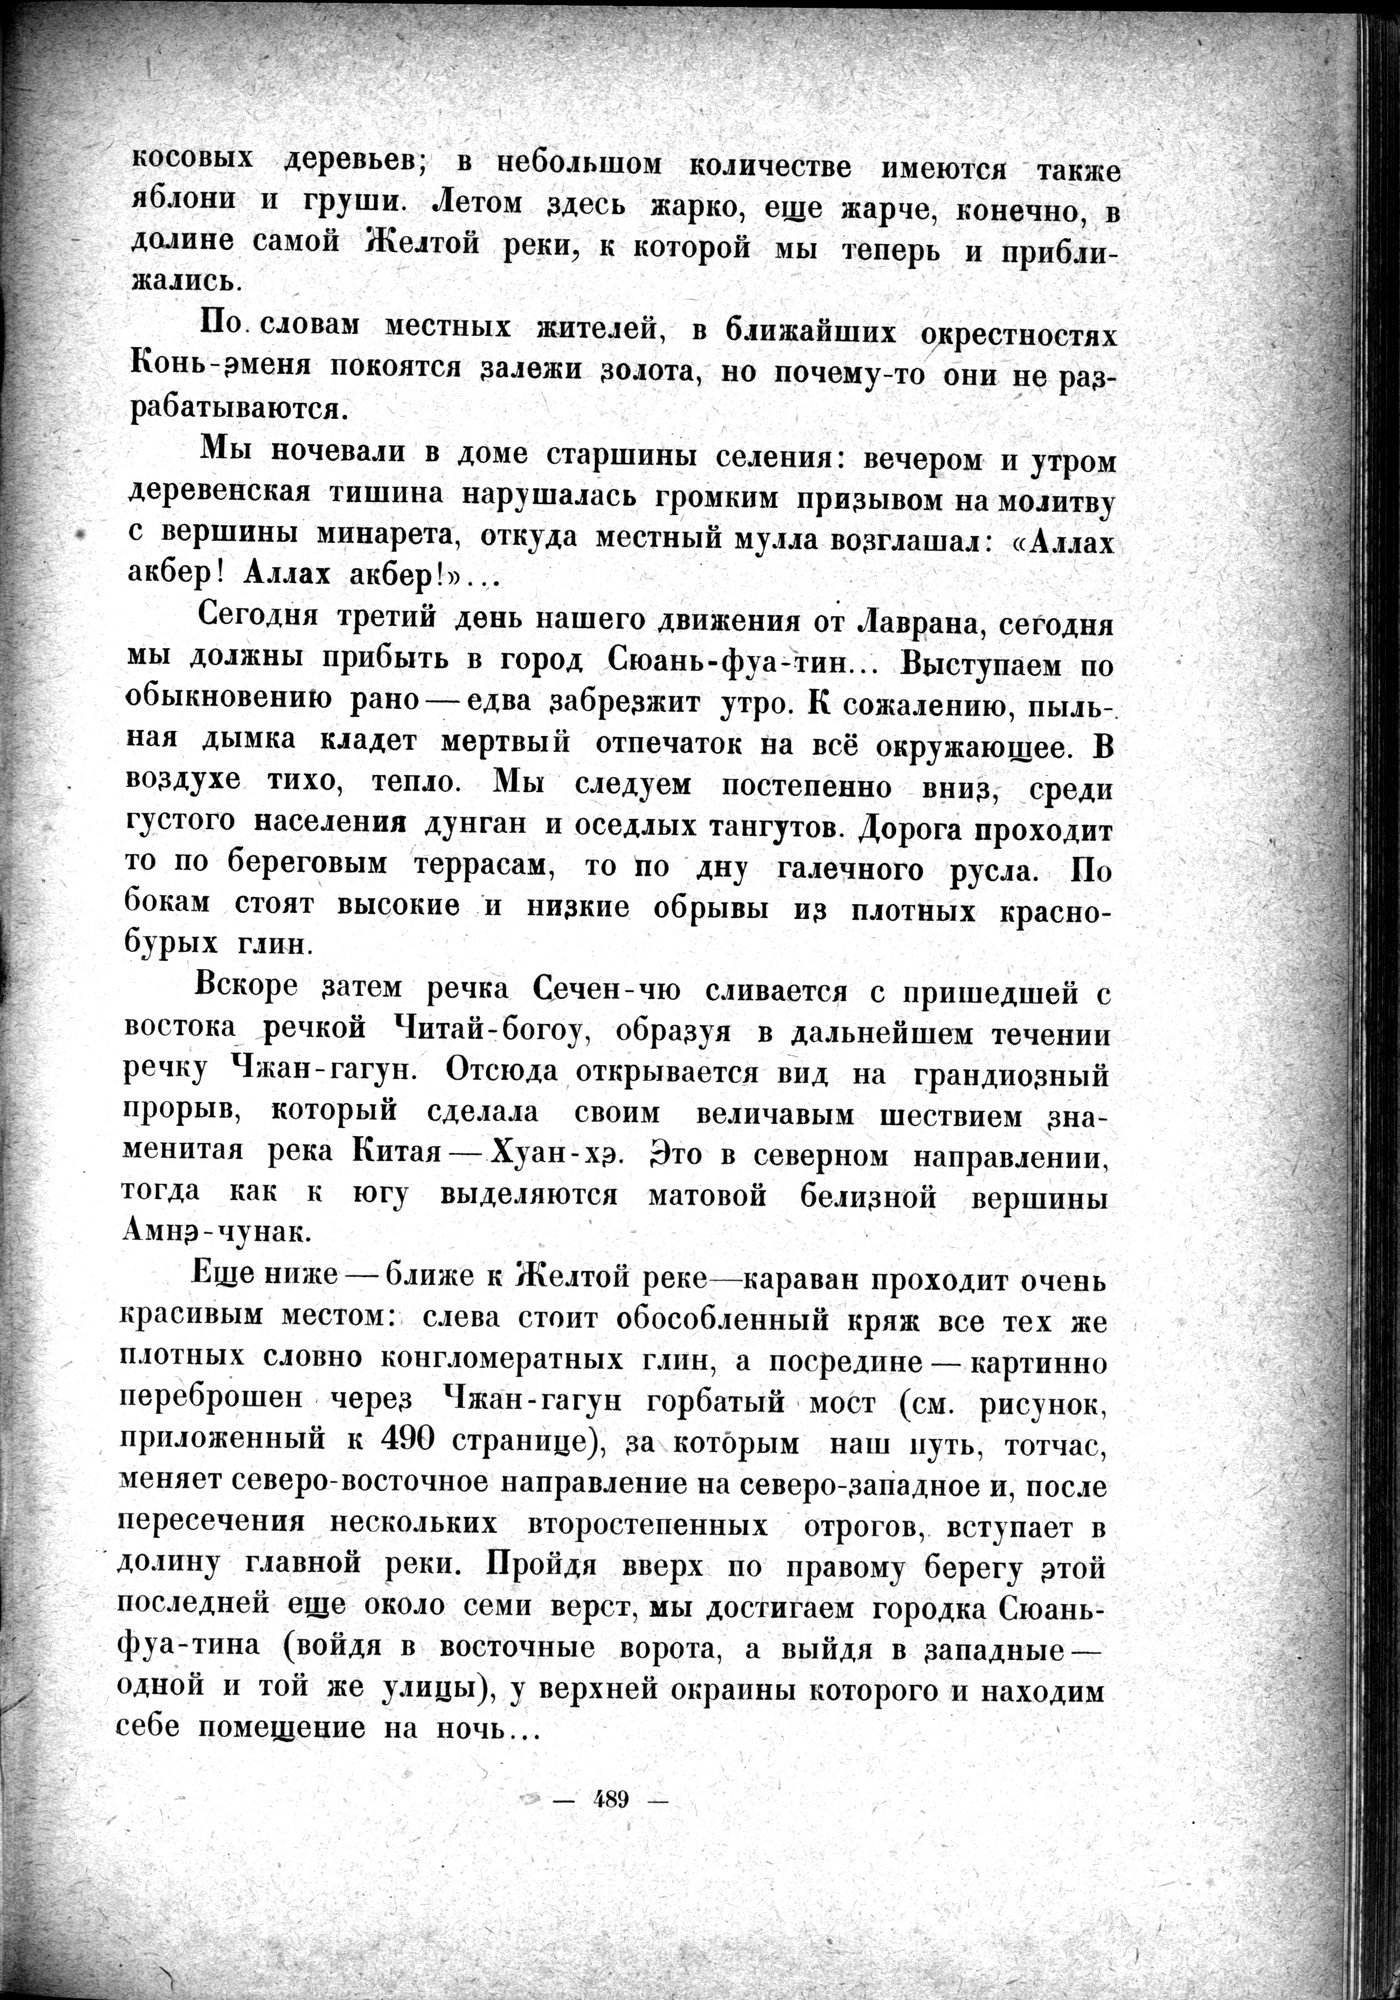 Mongoliya i Amdo i mertby gorod Khara-Khoto : vol.1 / Page 559 (Grayscale High Resolution Image)